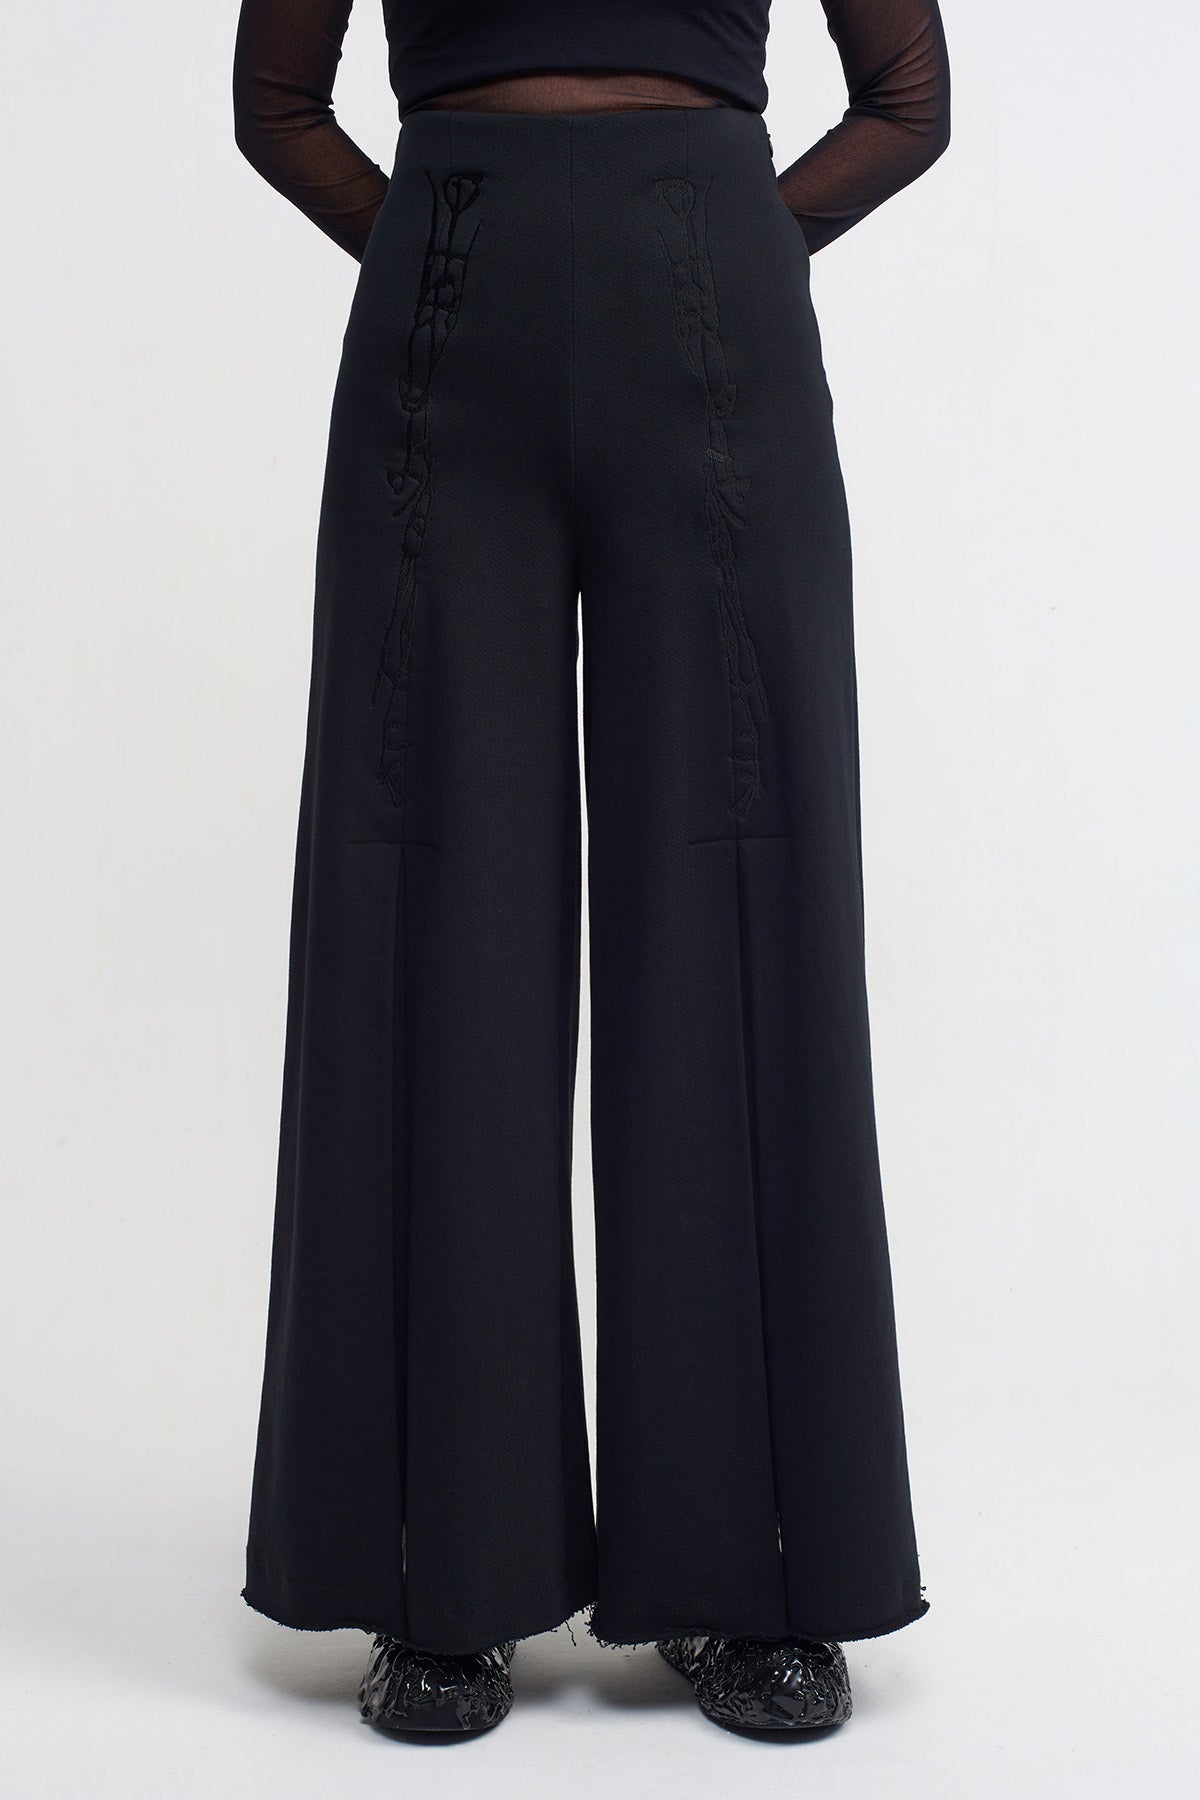 Black Embroidered Slit Detailed High-Waisted Pants-K233013004